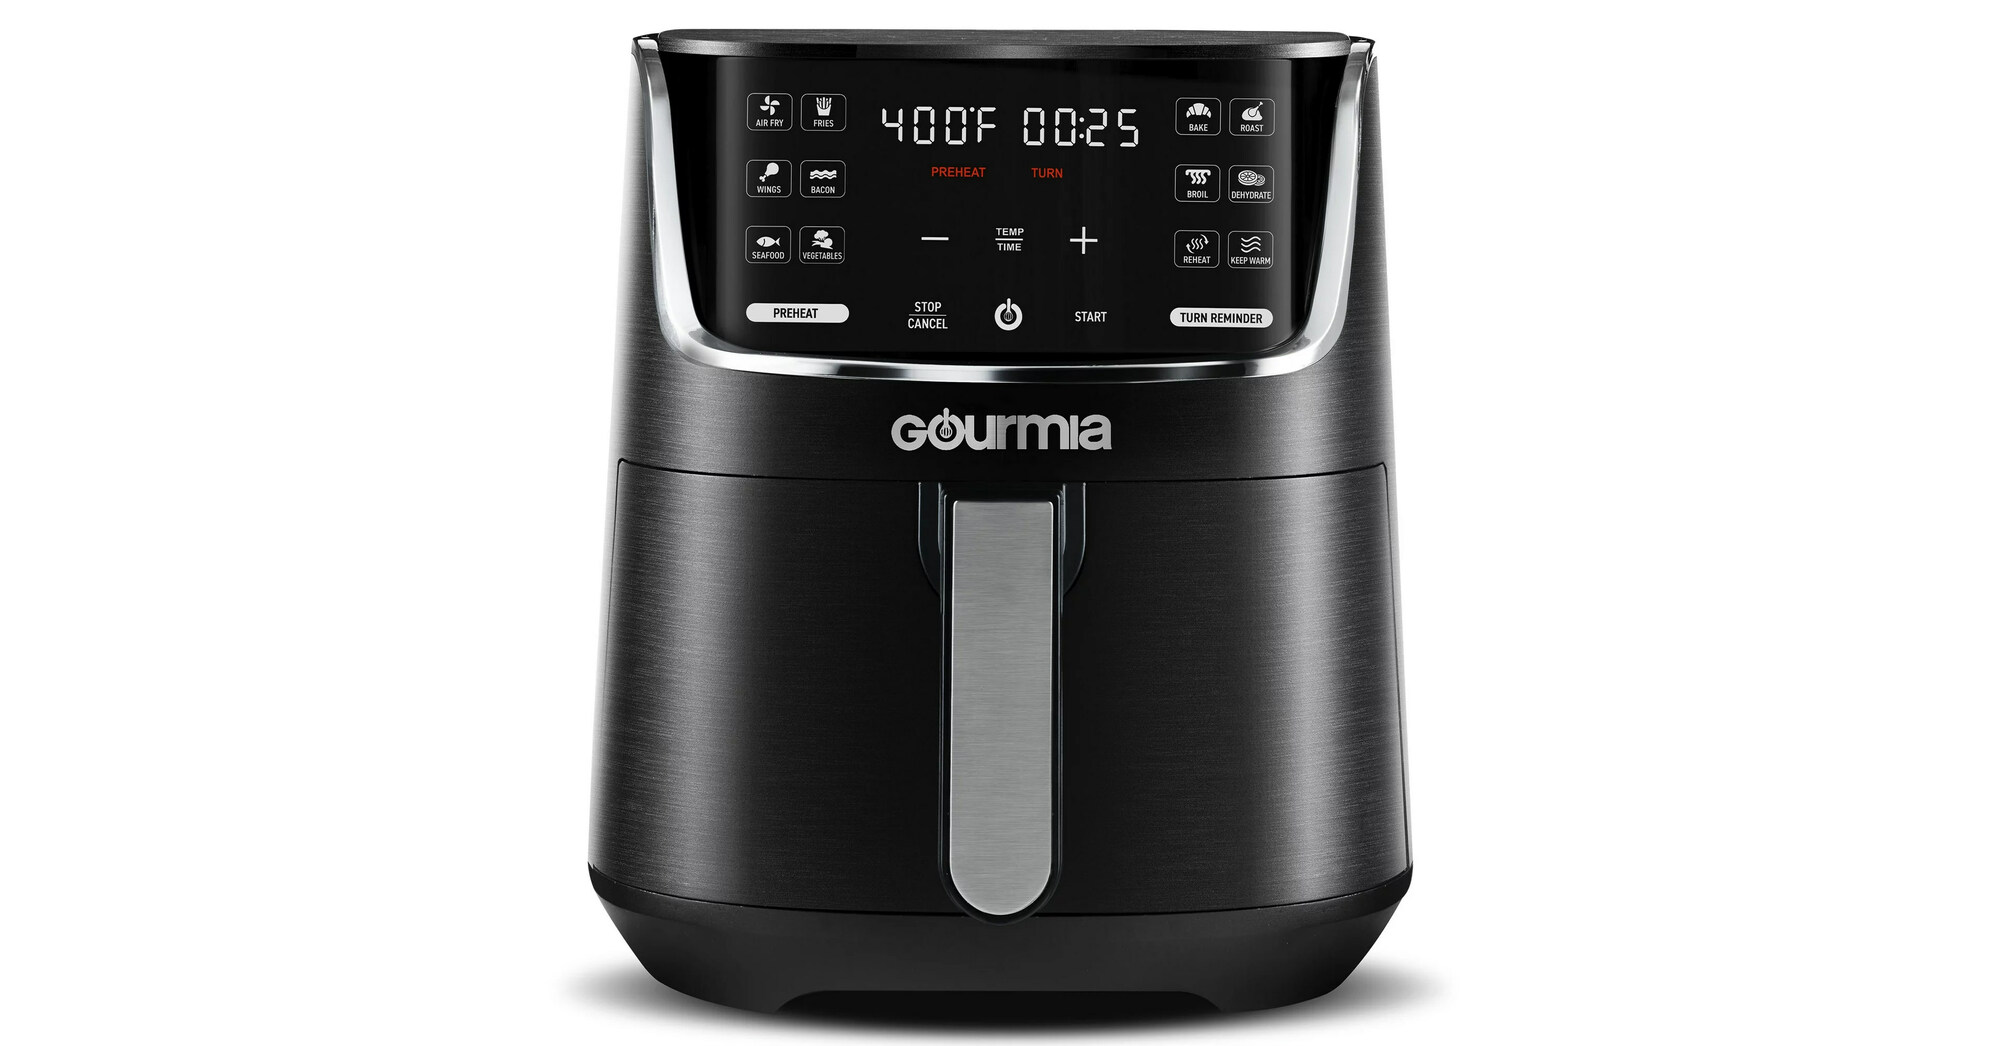 Gourmia Intros New 4-Quart Digital Air Fryer Exclusively at Walmart